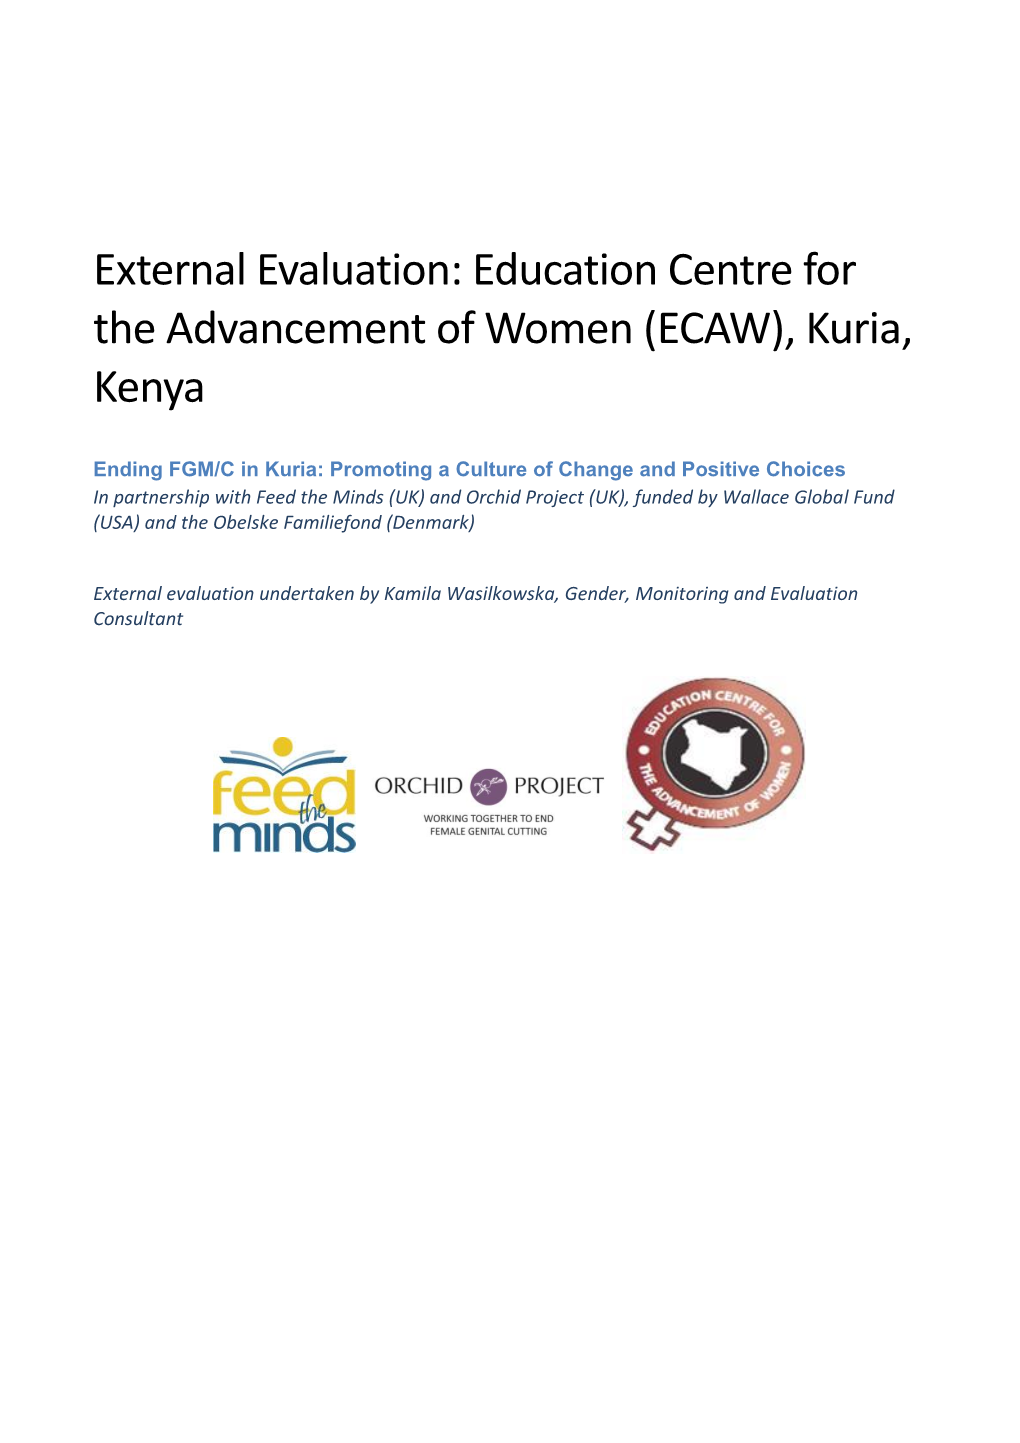 External Evaluation: Education Centre for the Advancement of Women (ECAW), Kuria, Kenya